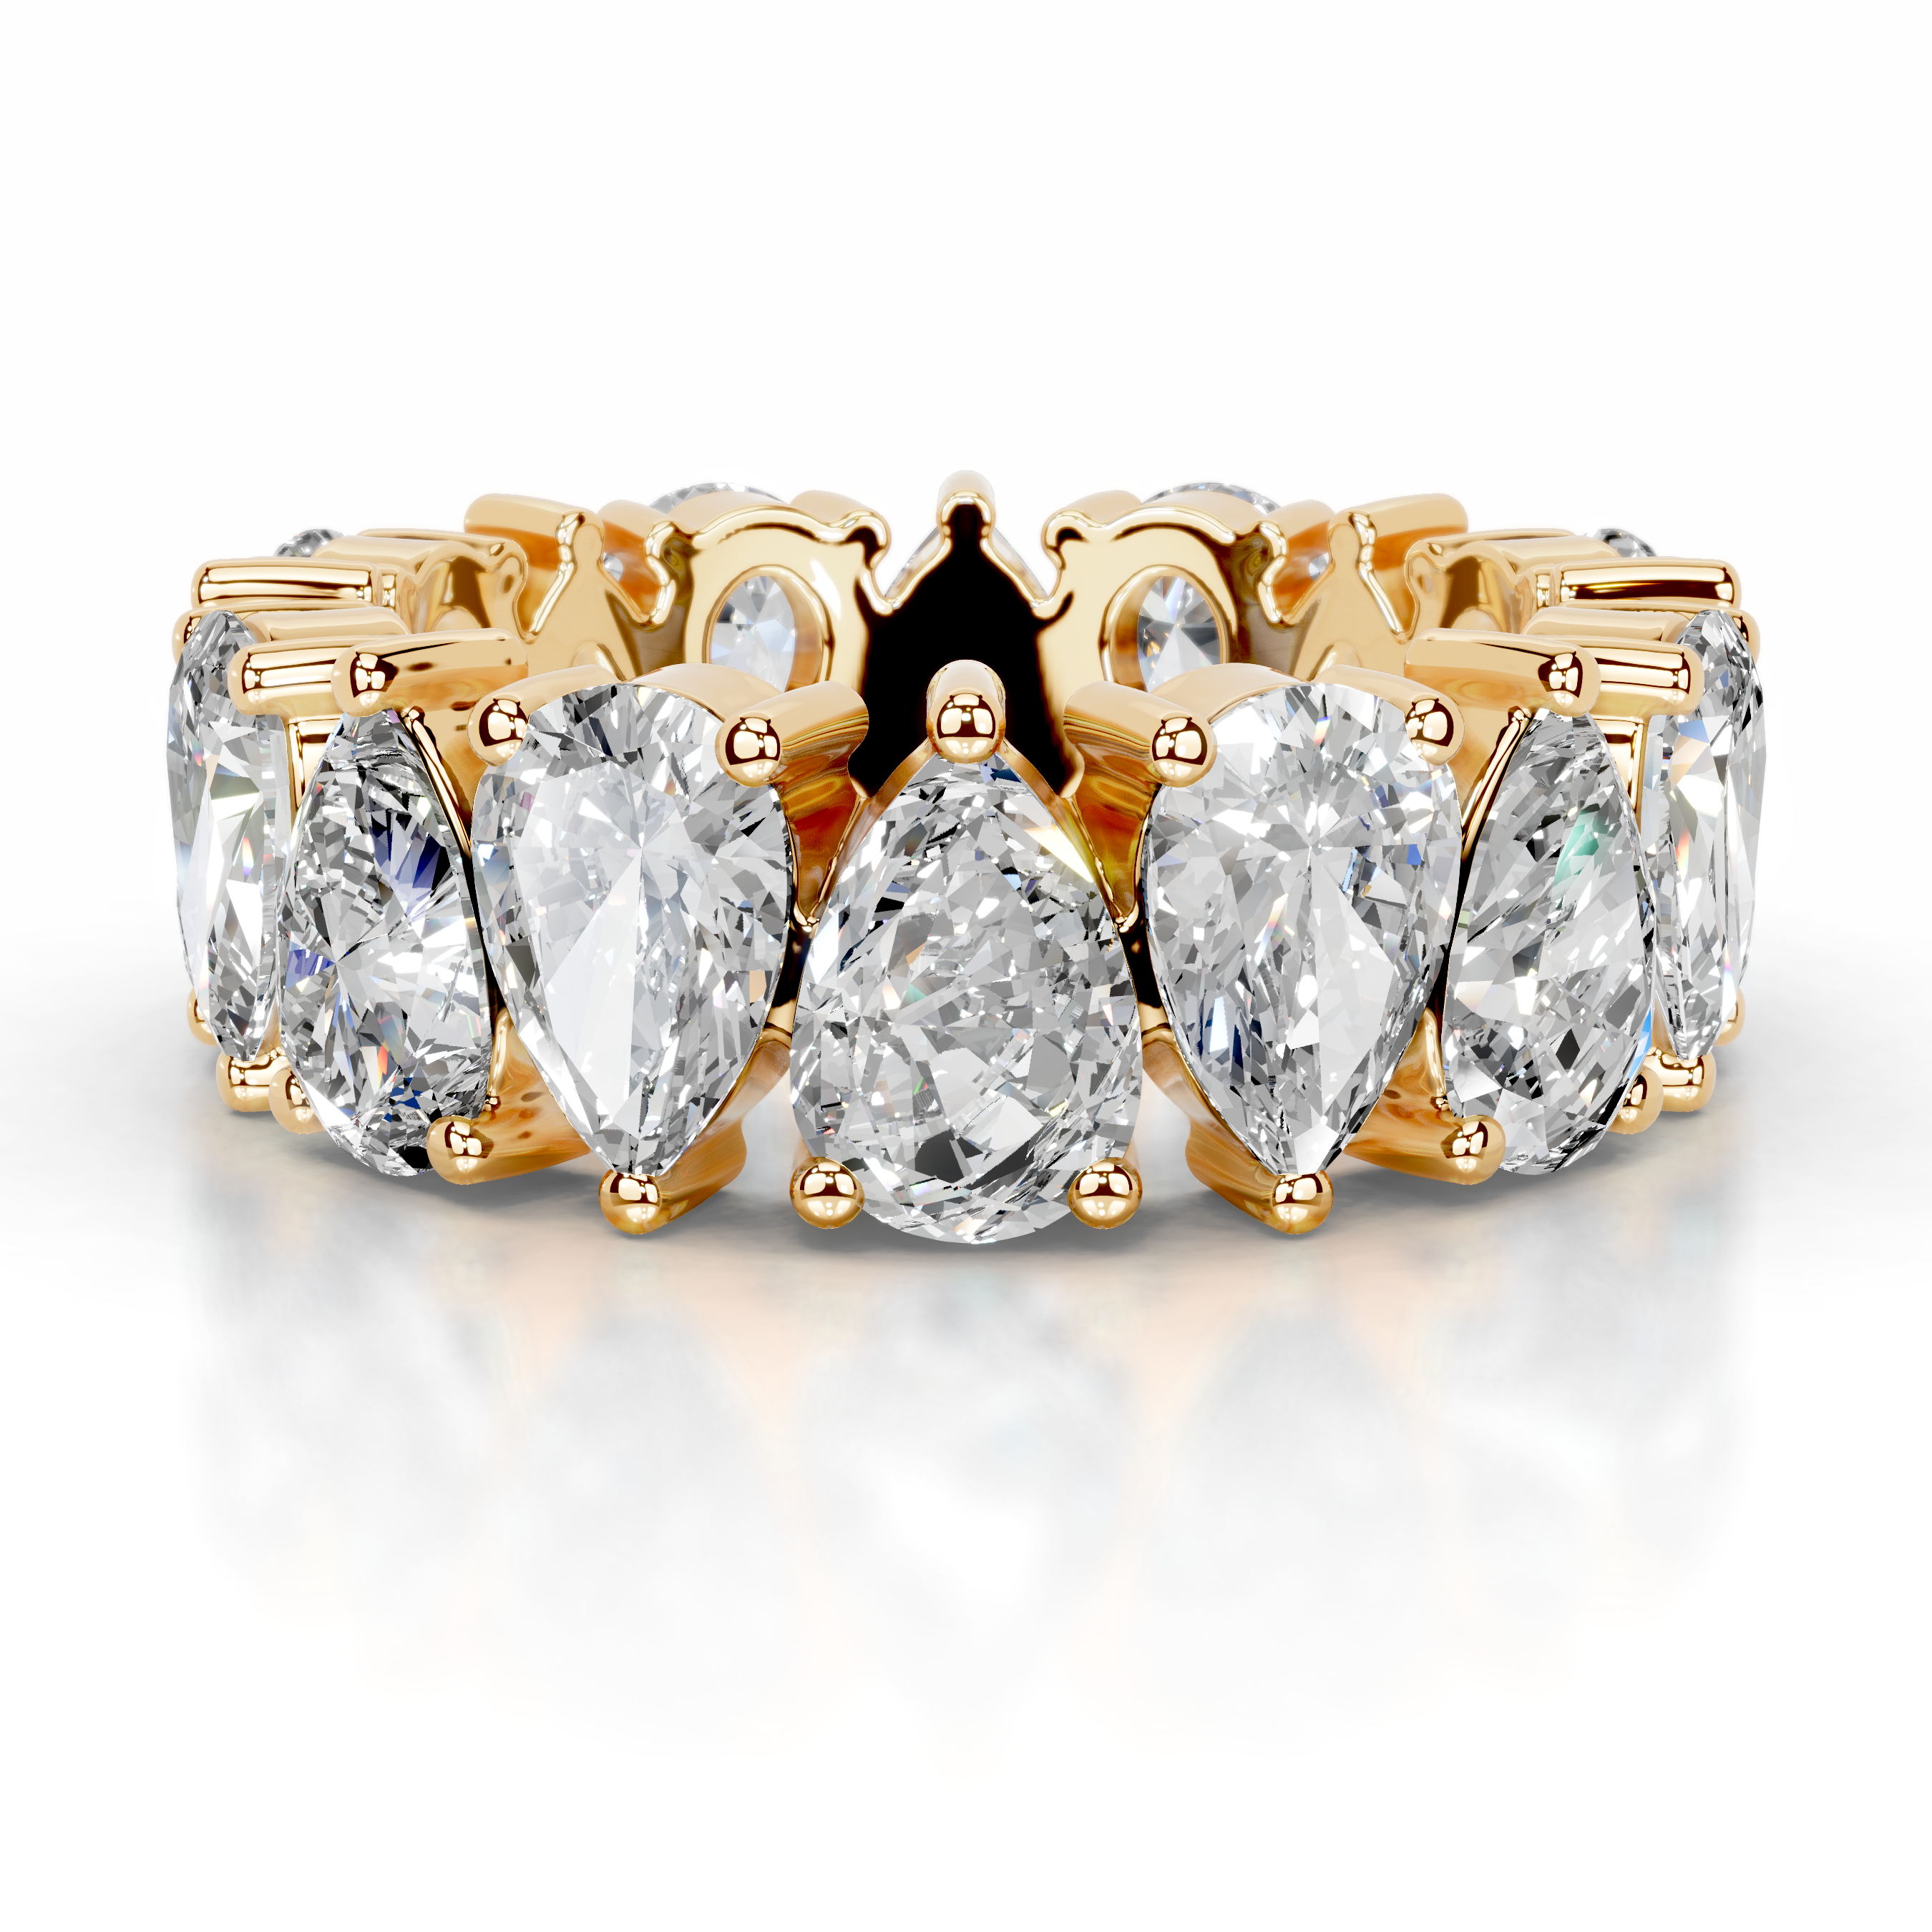 Sarah Diamond Wedding Ring   (6 Carat) -18K Yellow Gold